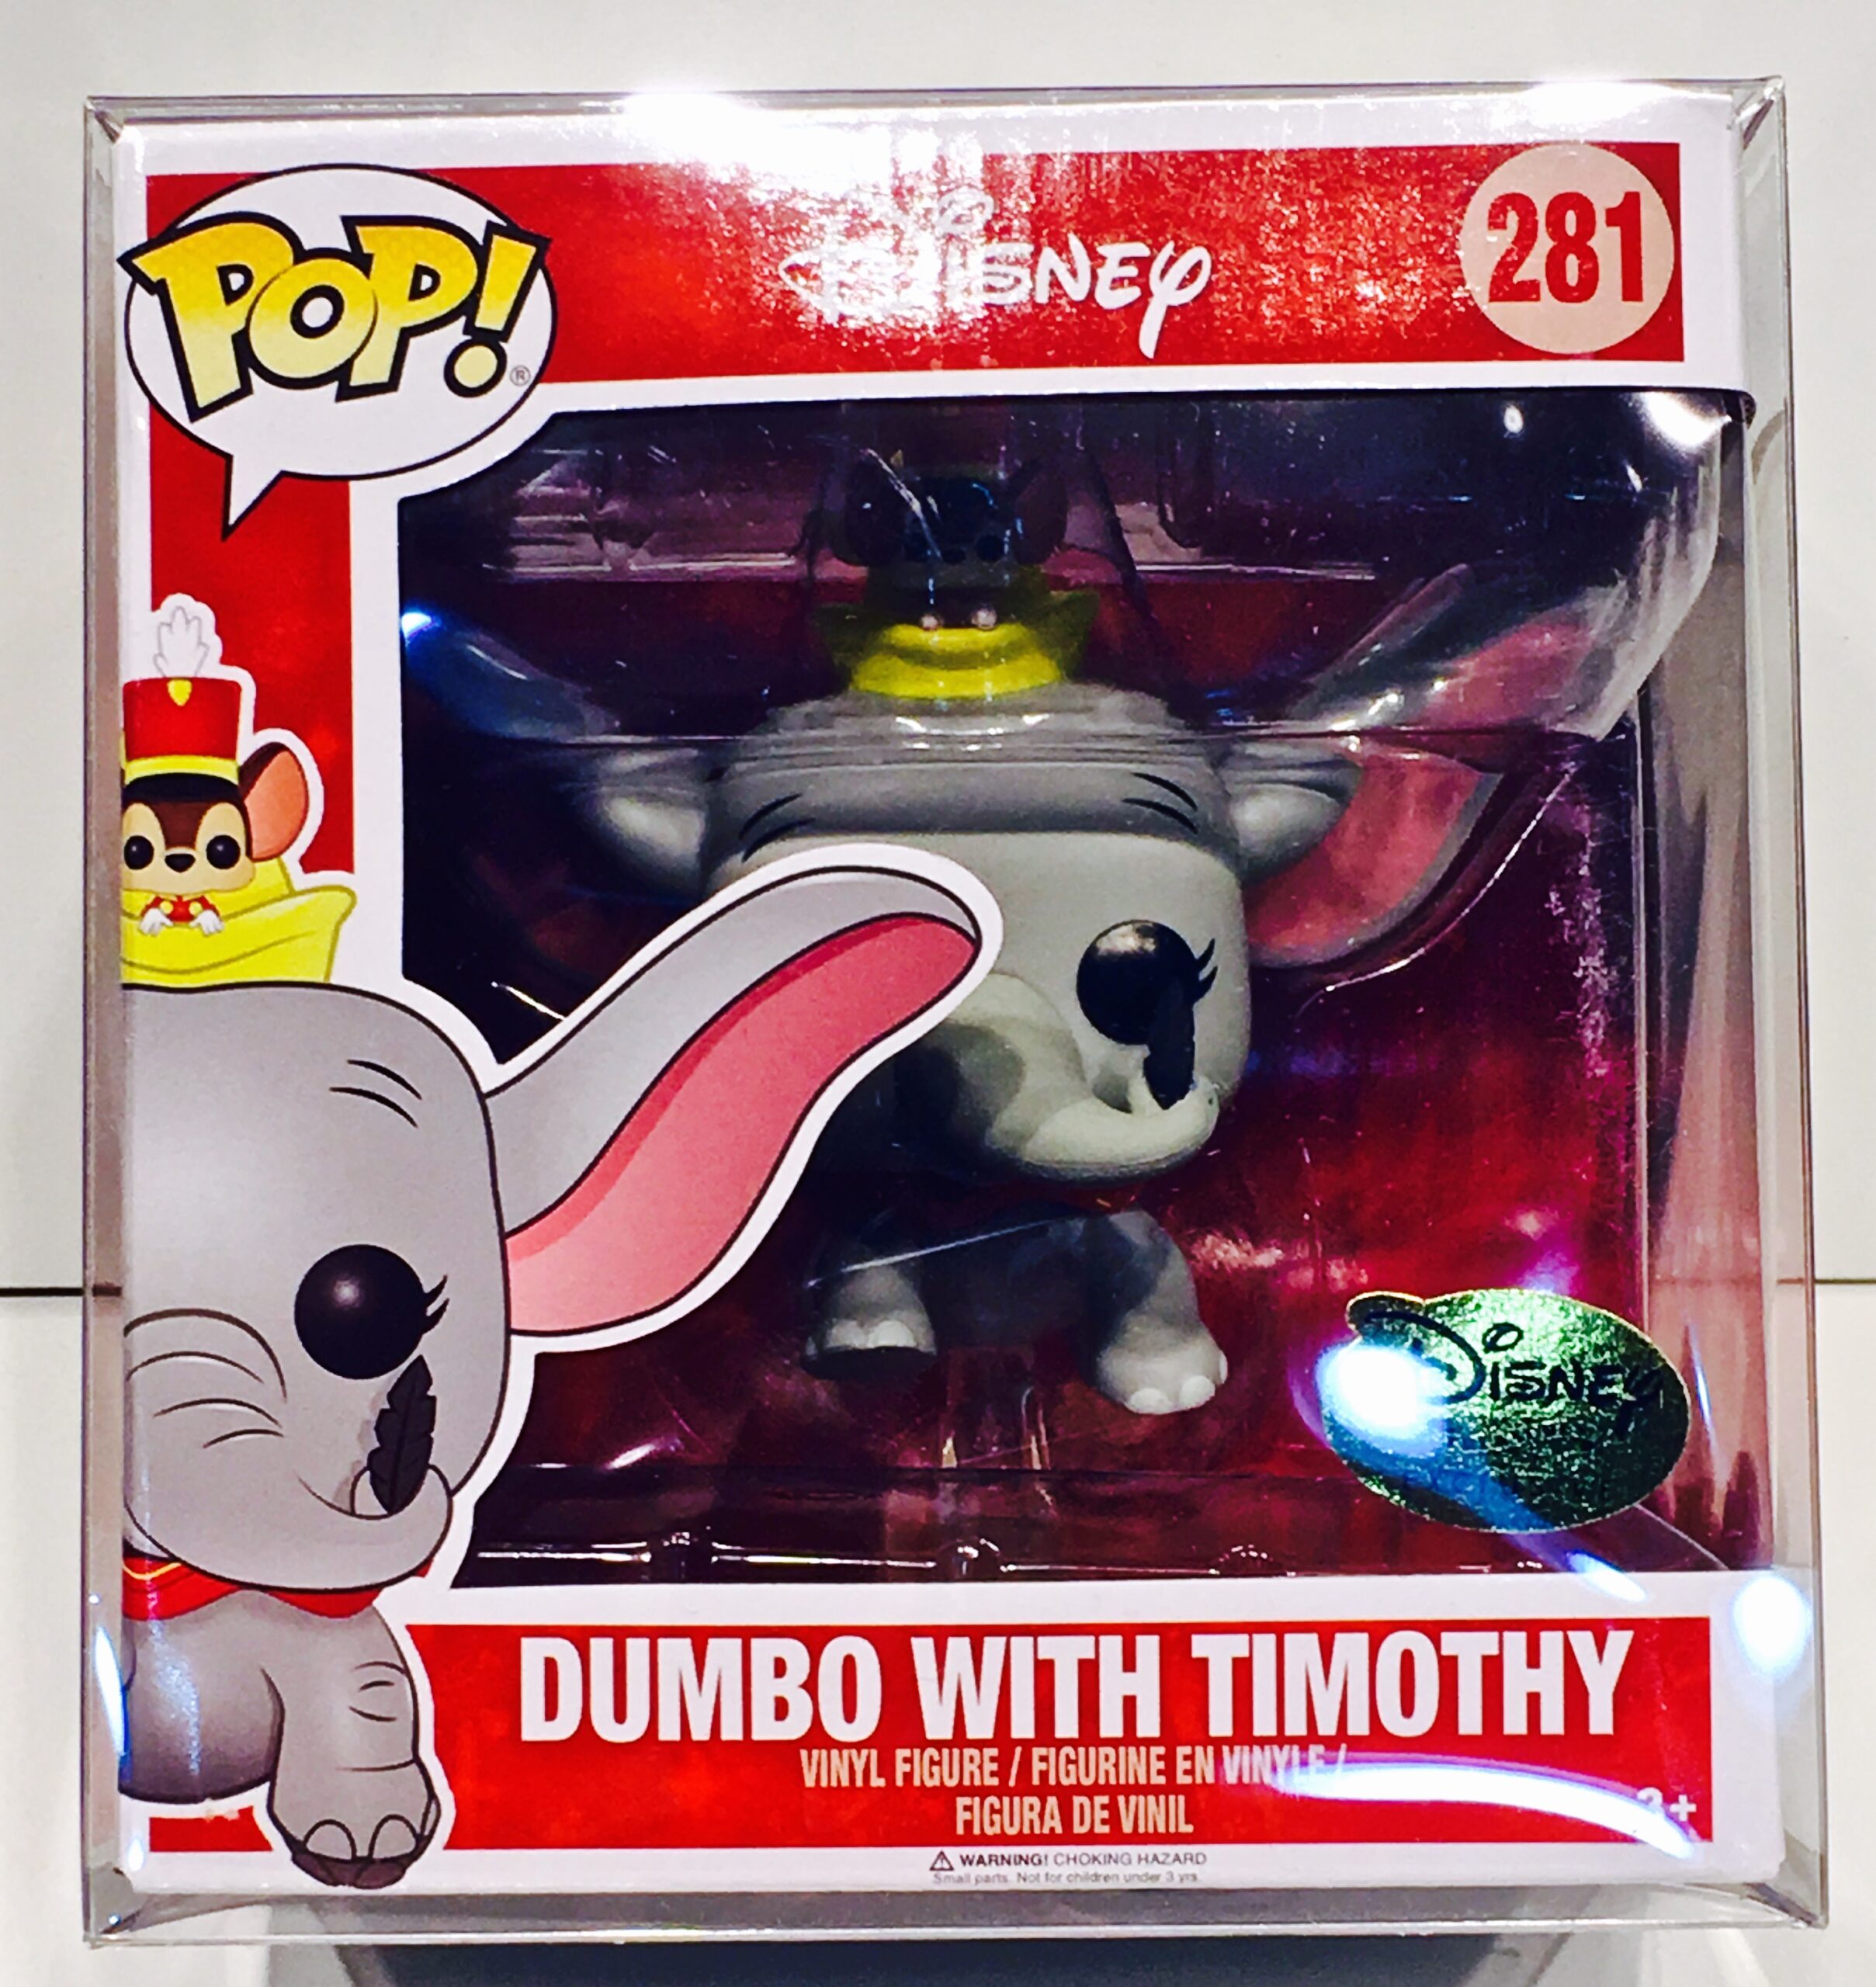 Protector Dumbo RetroProtection Treasures Box Pop! Funko Disney –